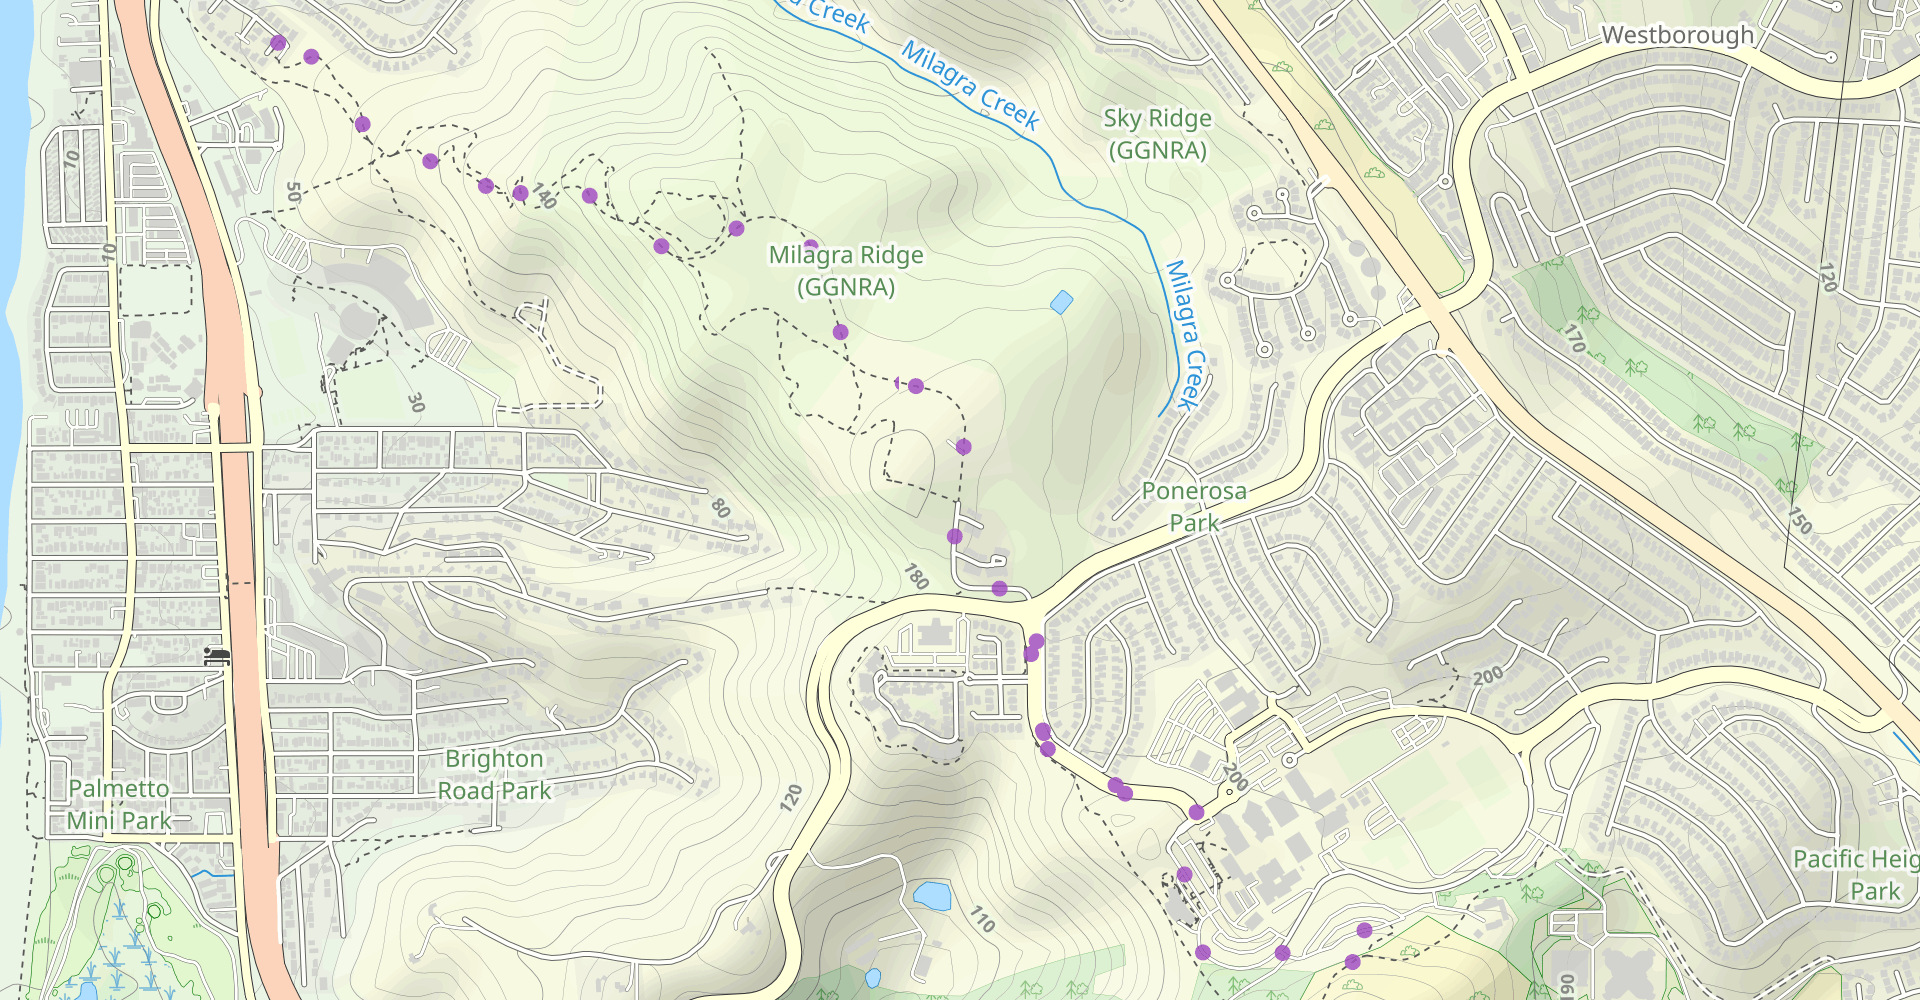 Milagra Ridge Trail Loop